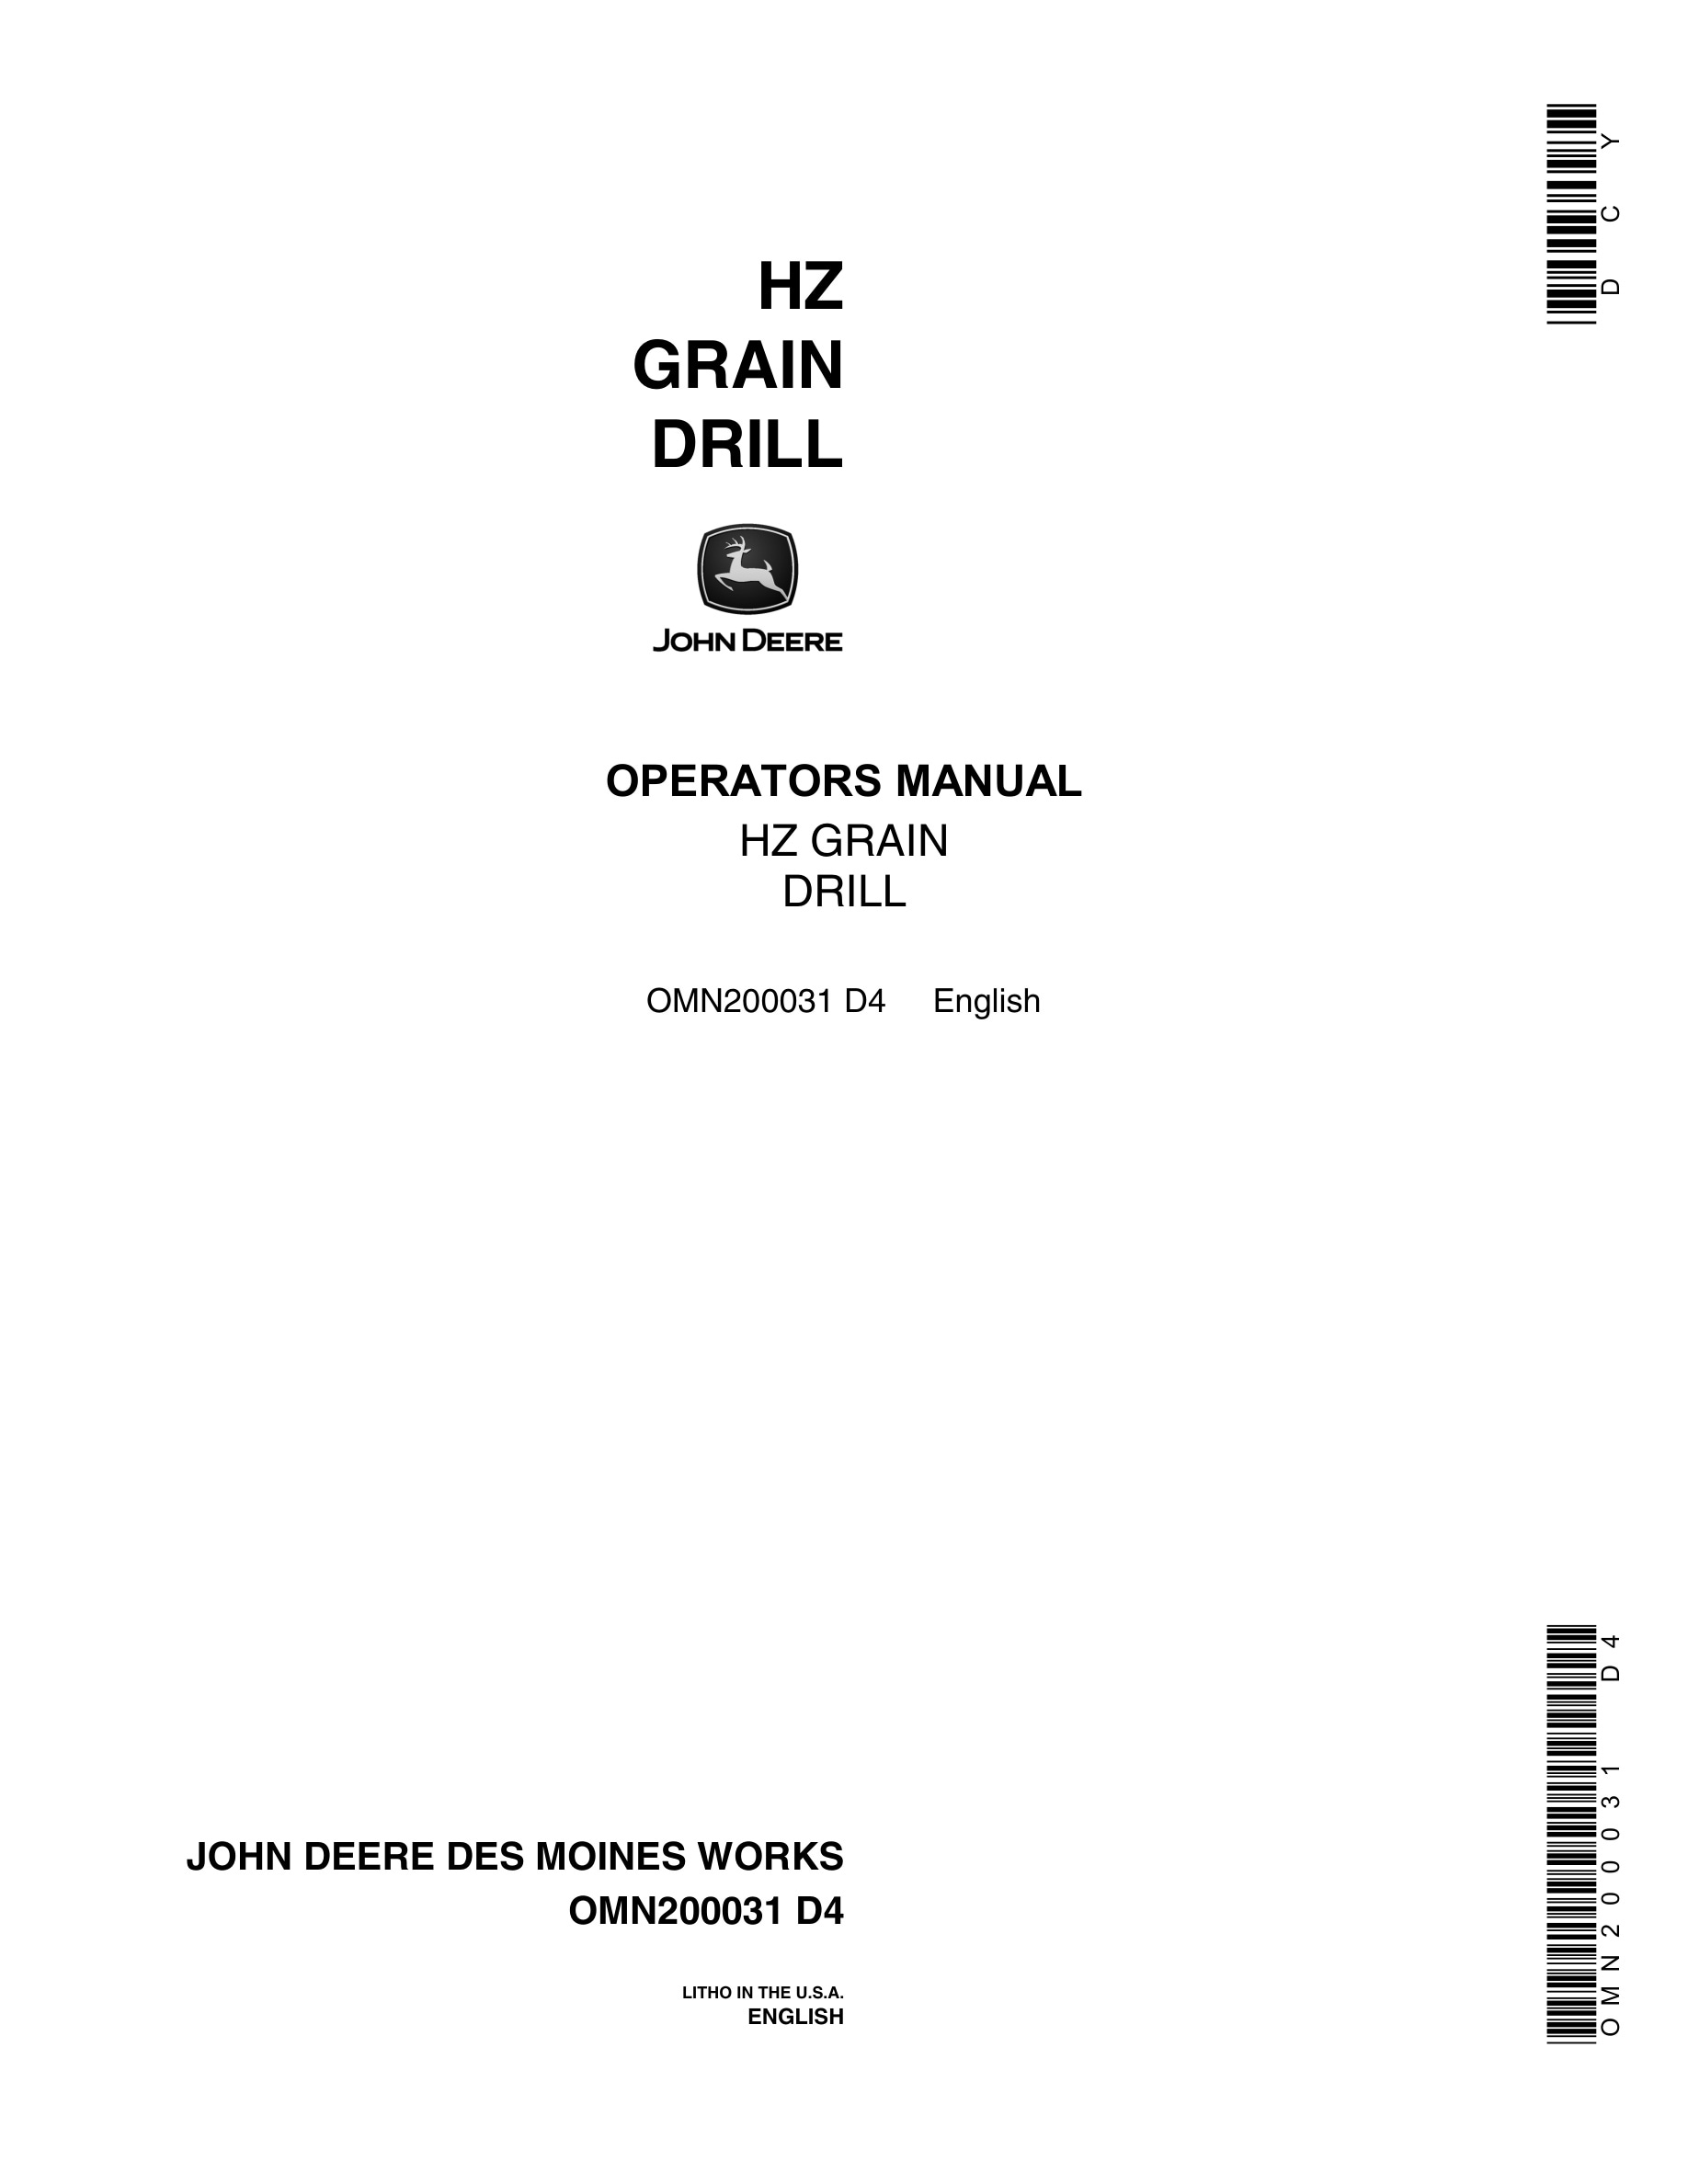 John Deere HZ GRAIN DRILL Operator Manual OMN200031-1